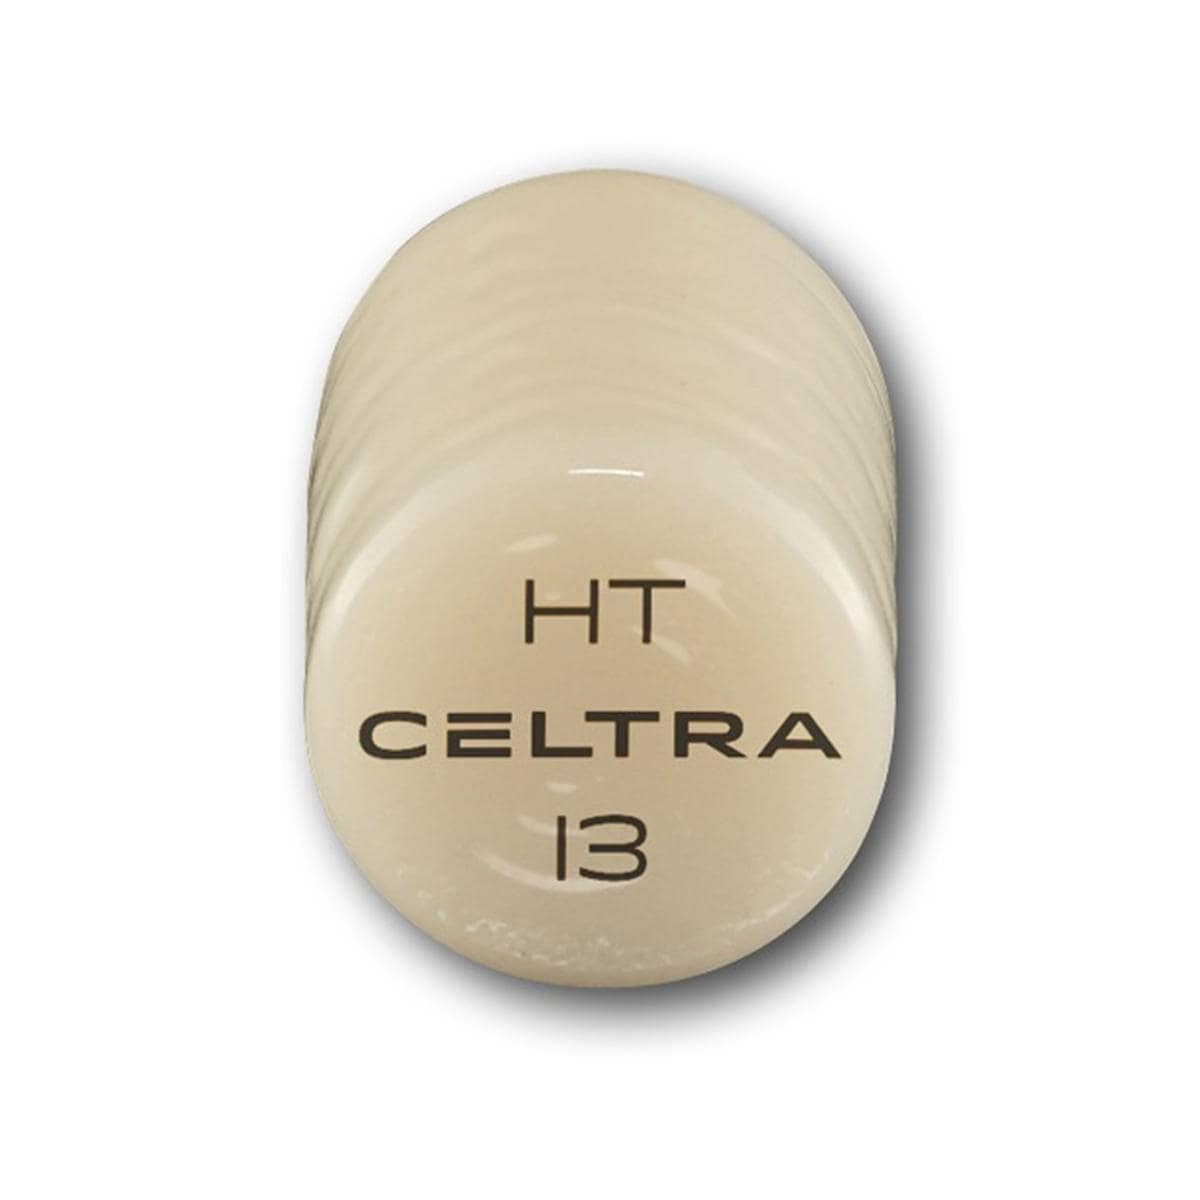 CELTRA® Press HT - I3, Packung 3 x 6 g